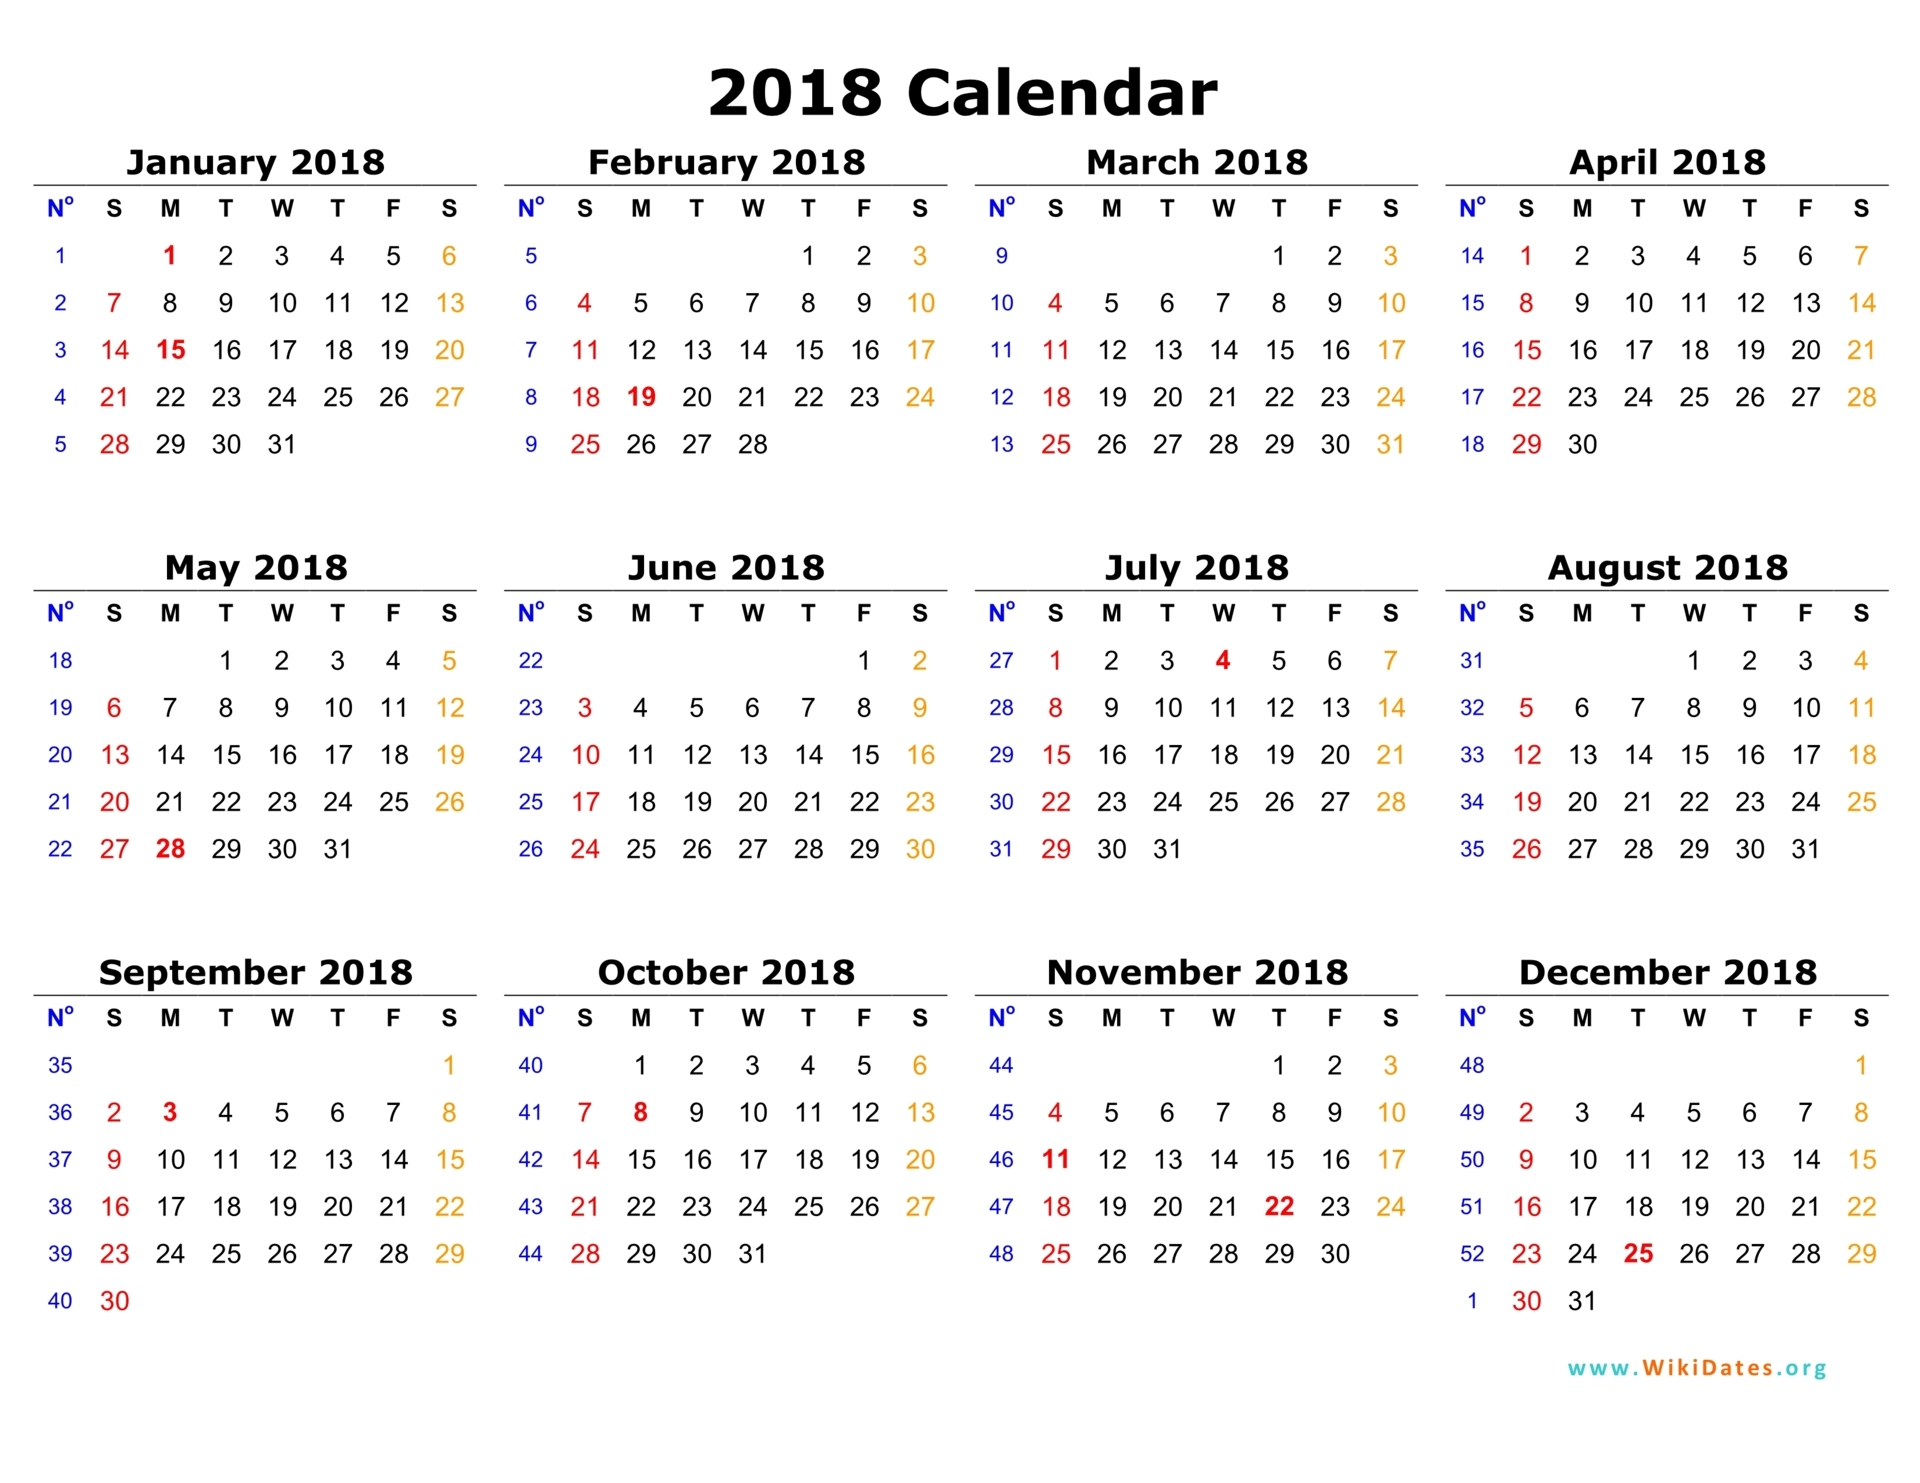 2018 Calendar | WikiDates.org